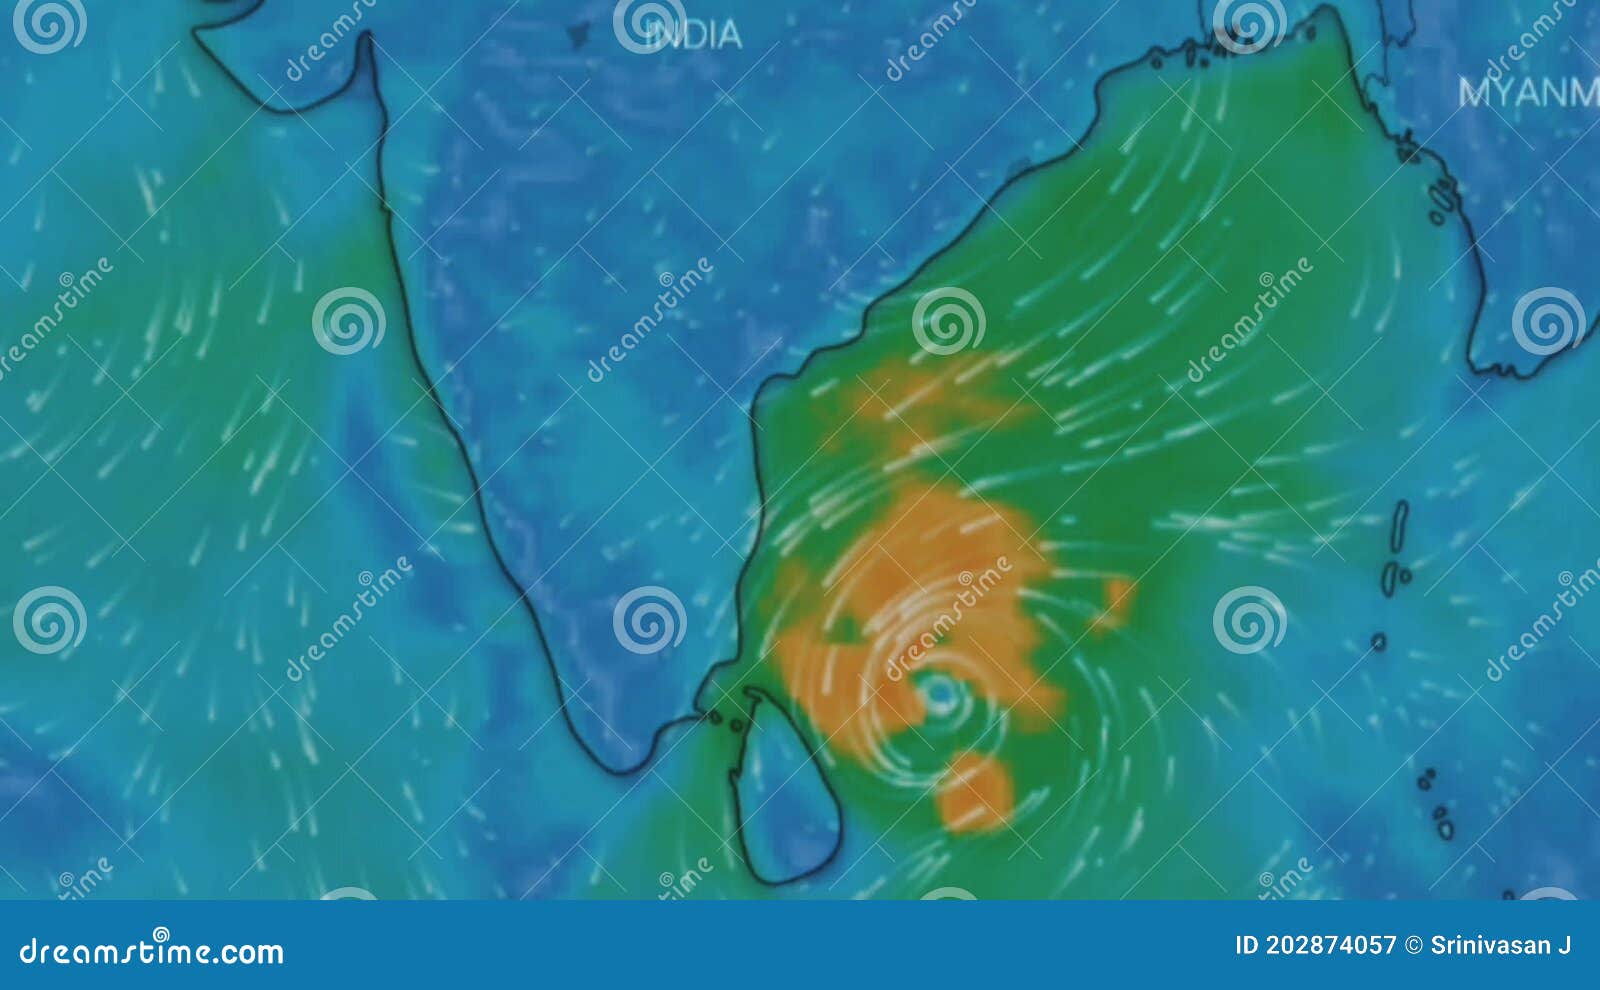 Nivar Cyclone Tracking Near Bay of Bangale on Weather Radar and Satellite  Screen Animation. Nivar Cyclone Heavy Rain Band Stock Video - Video of  indian, alert: 202874057